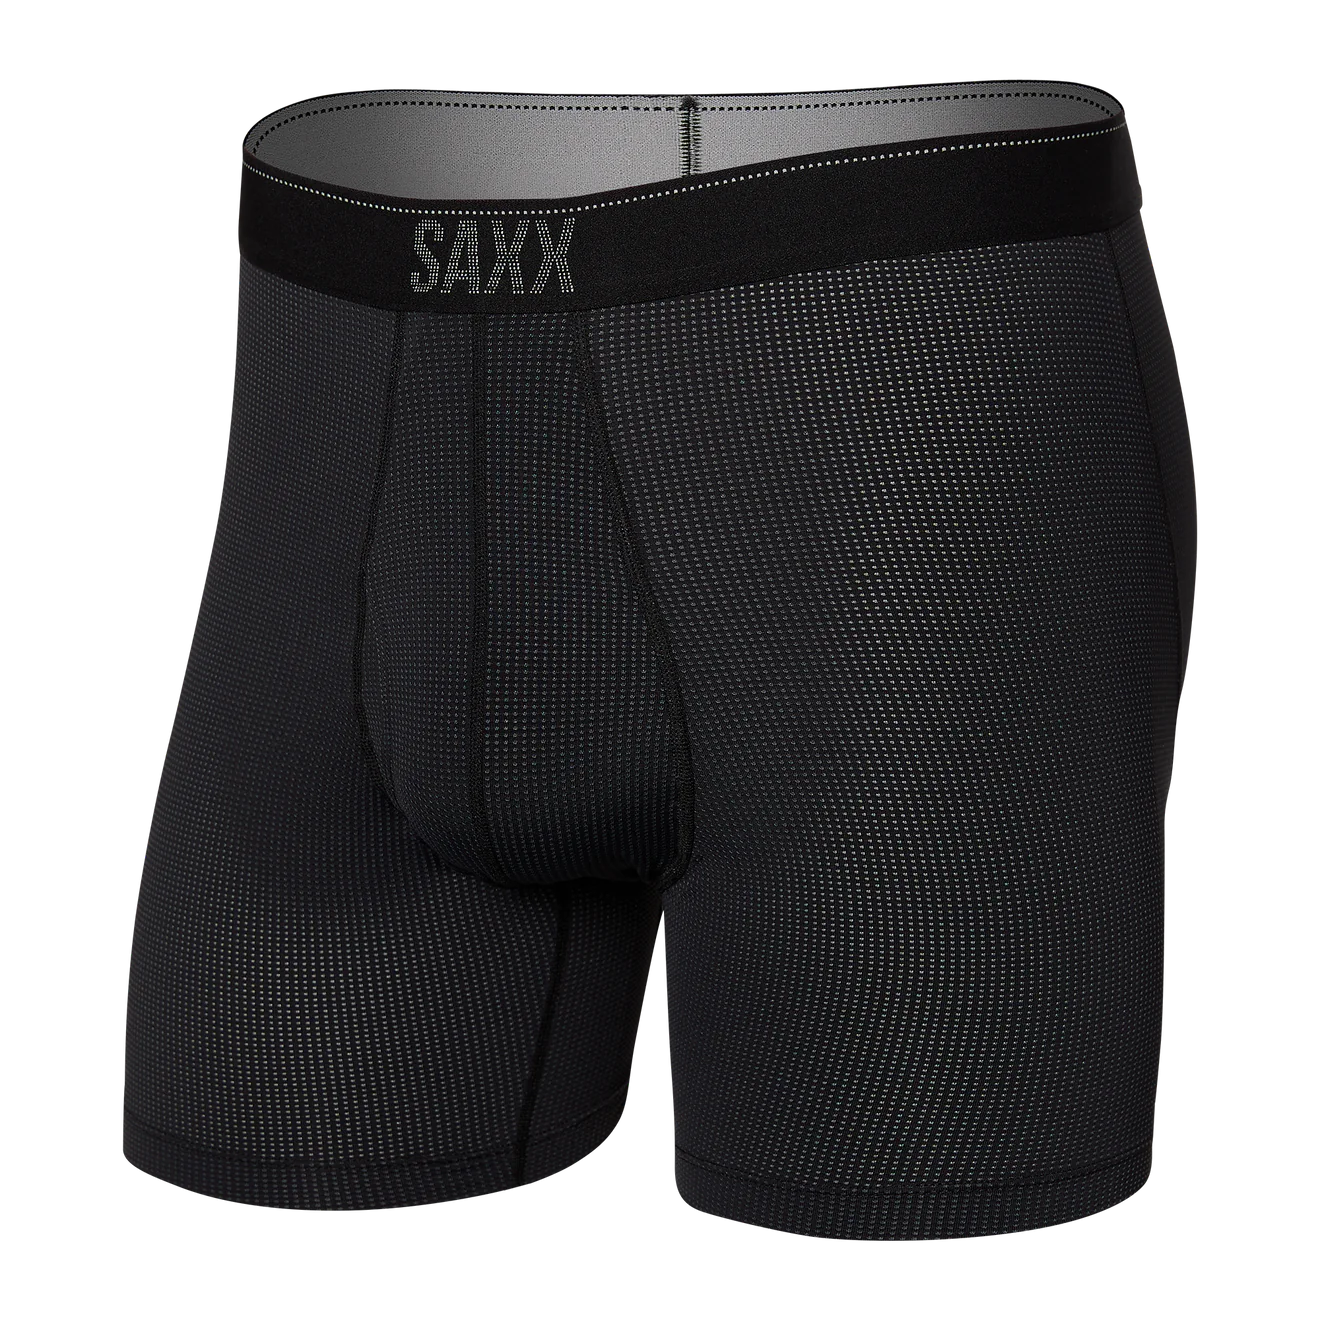 SAXX M Quest Boxer Brief BLACK 2